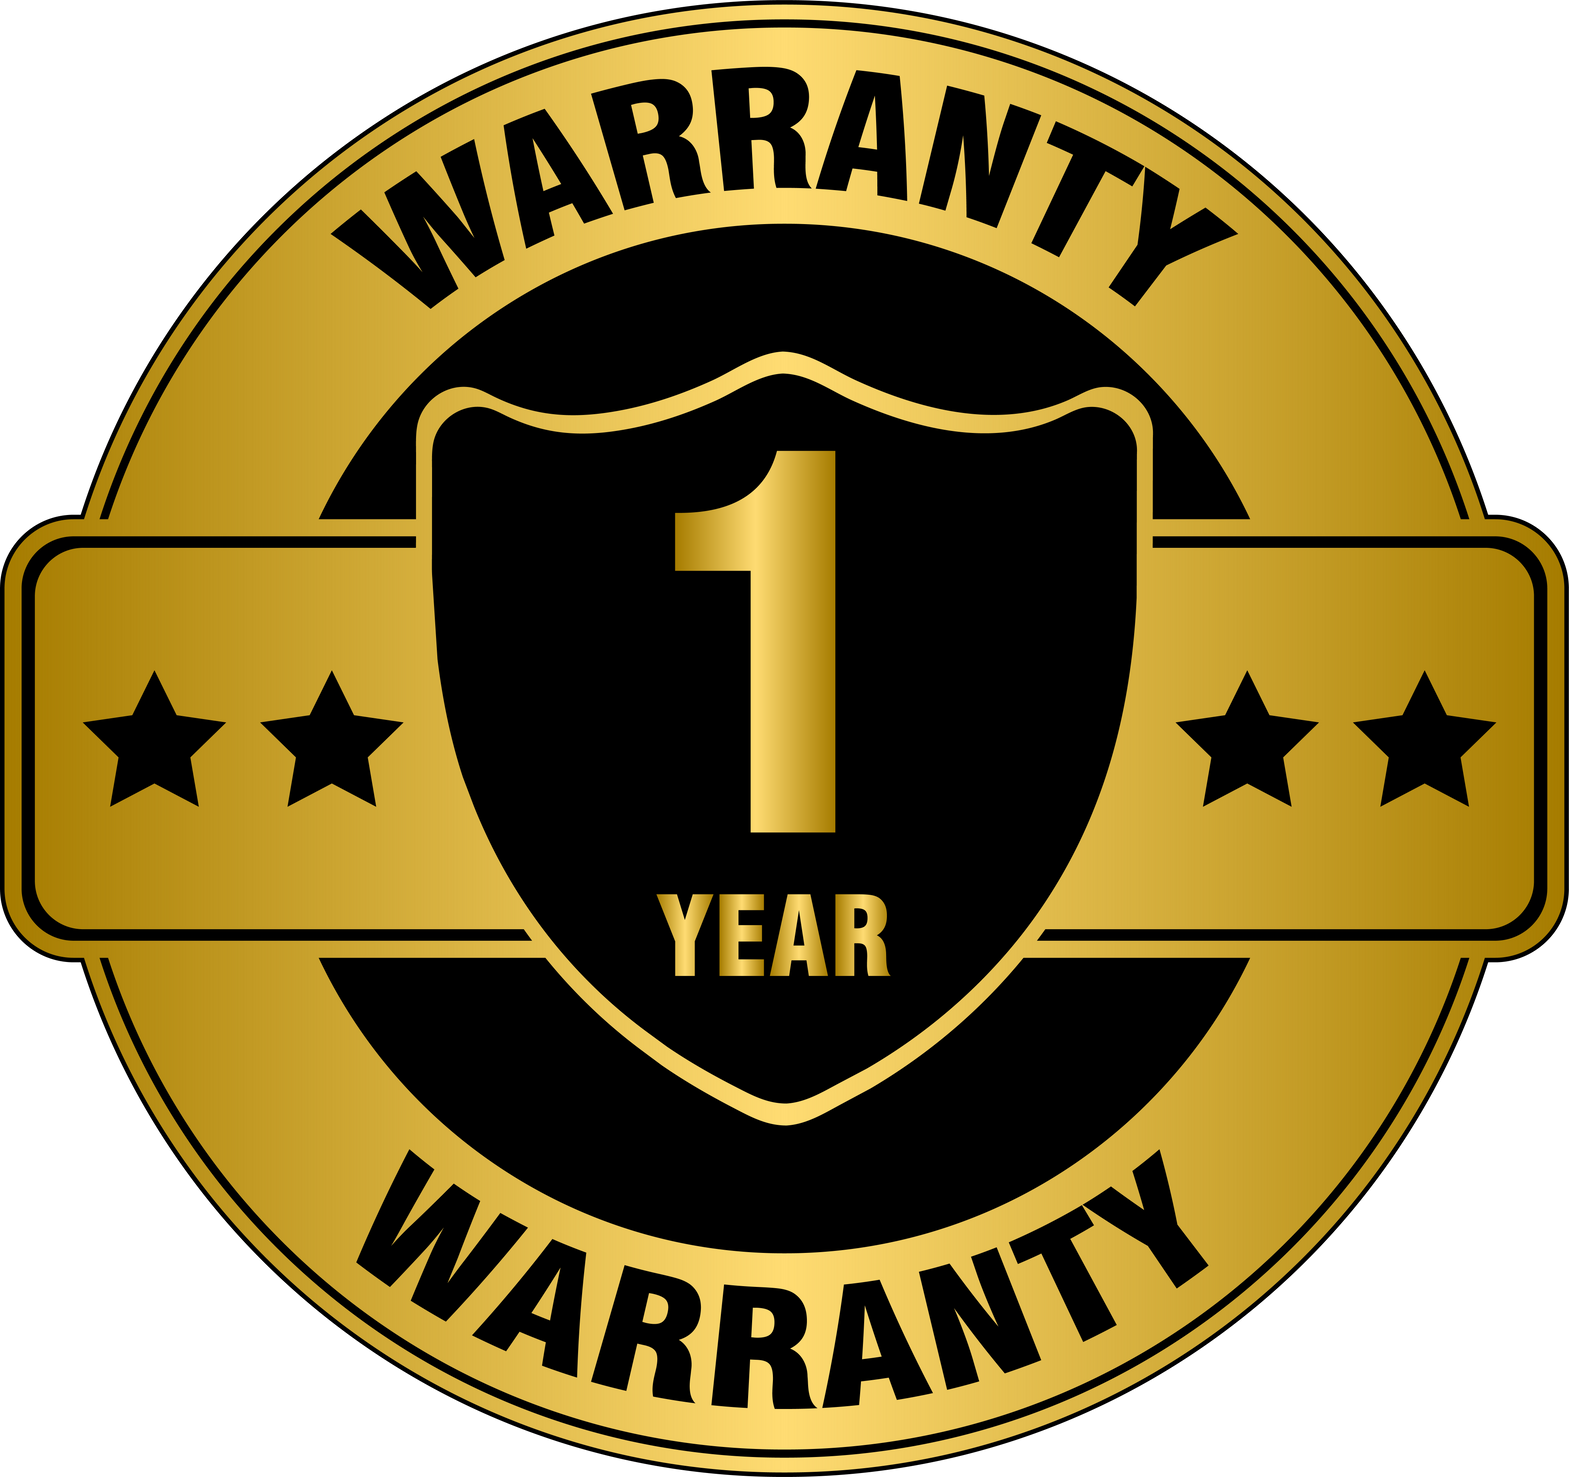 1 Year Warranty Golden Label